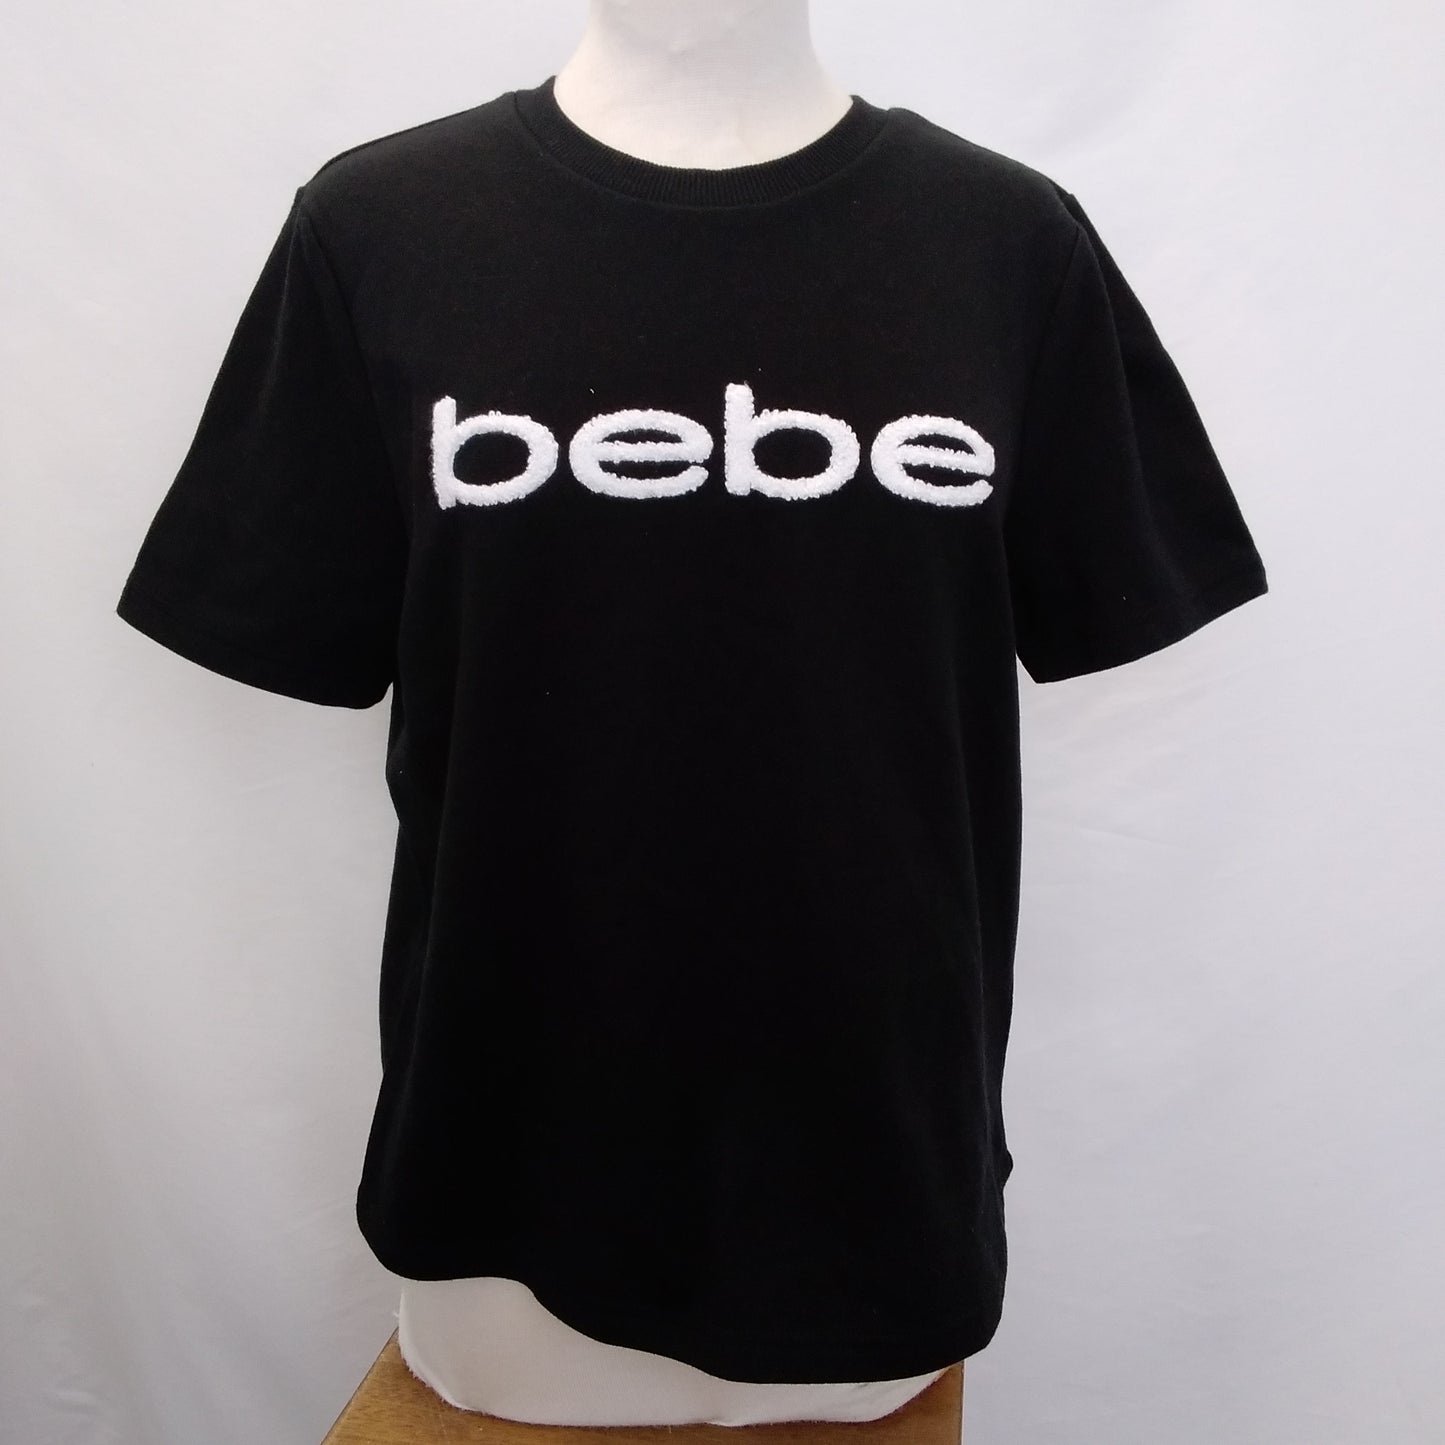 Bebe Sport Black Mesh Vented Back Short Sleeve Tee Shirt - L